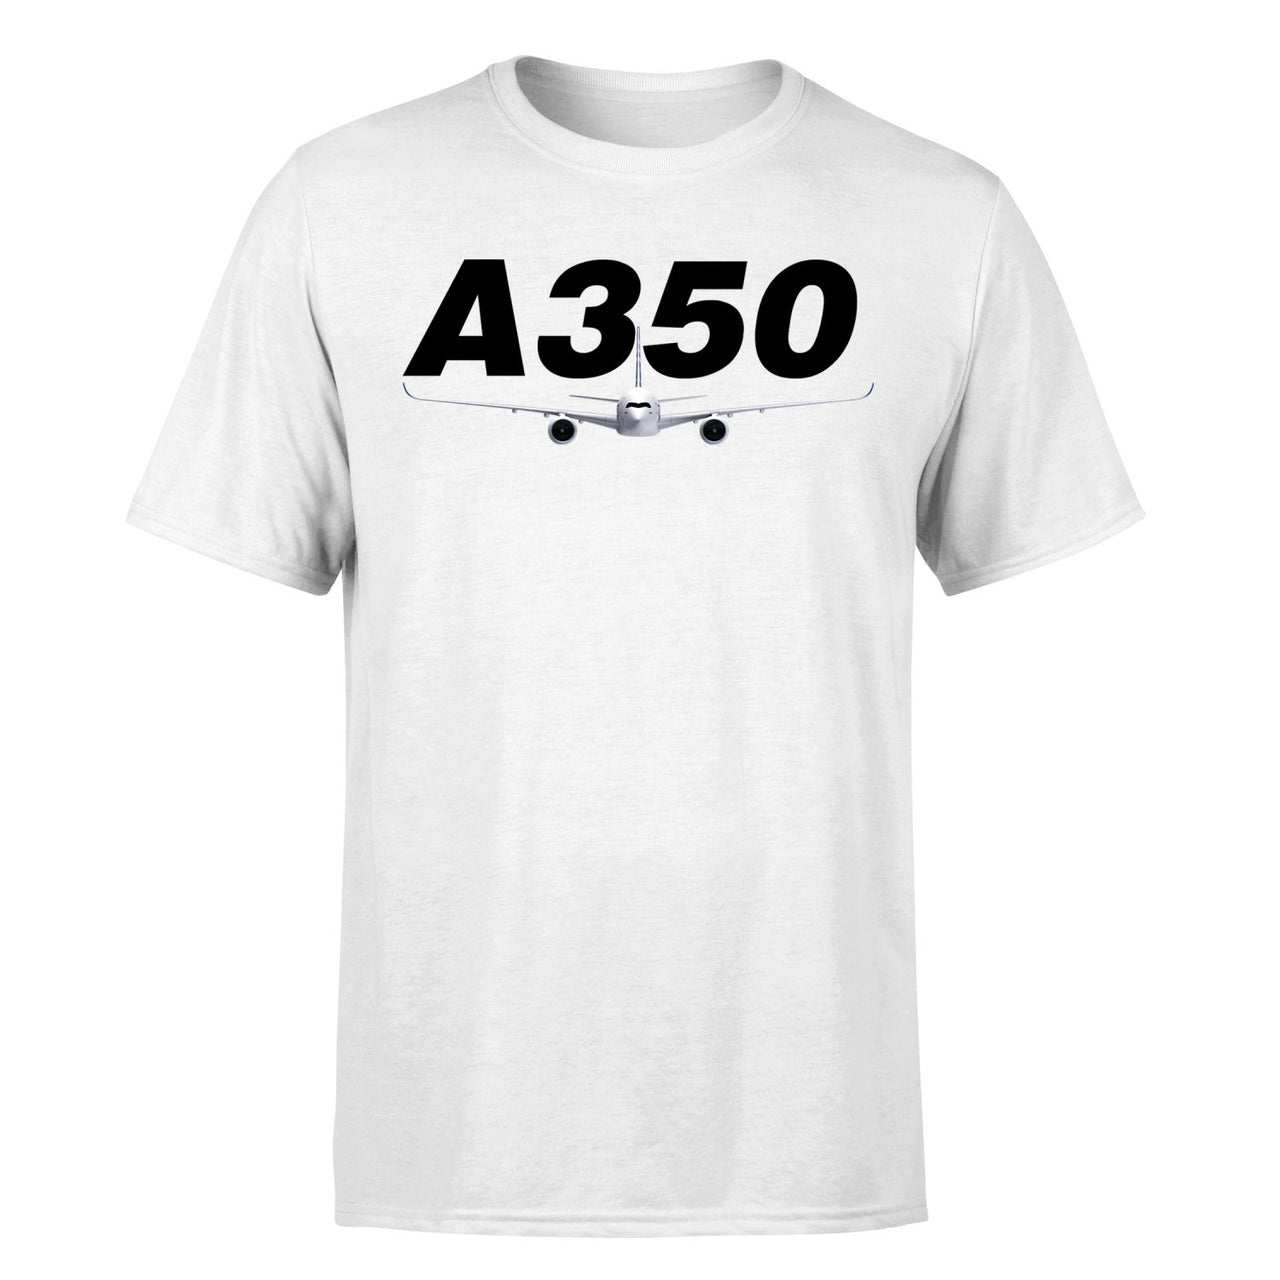 Super Airbus A350 Designed T-Shirts